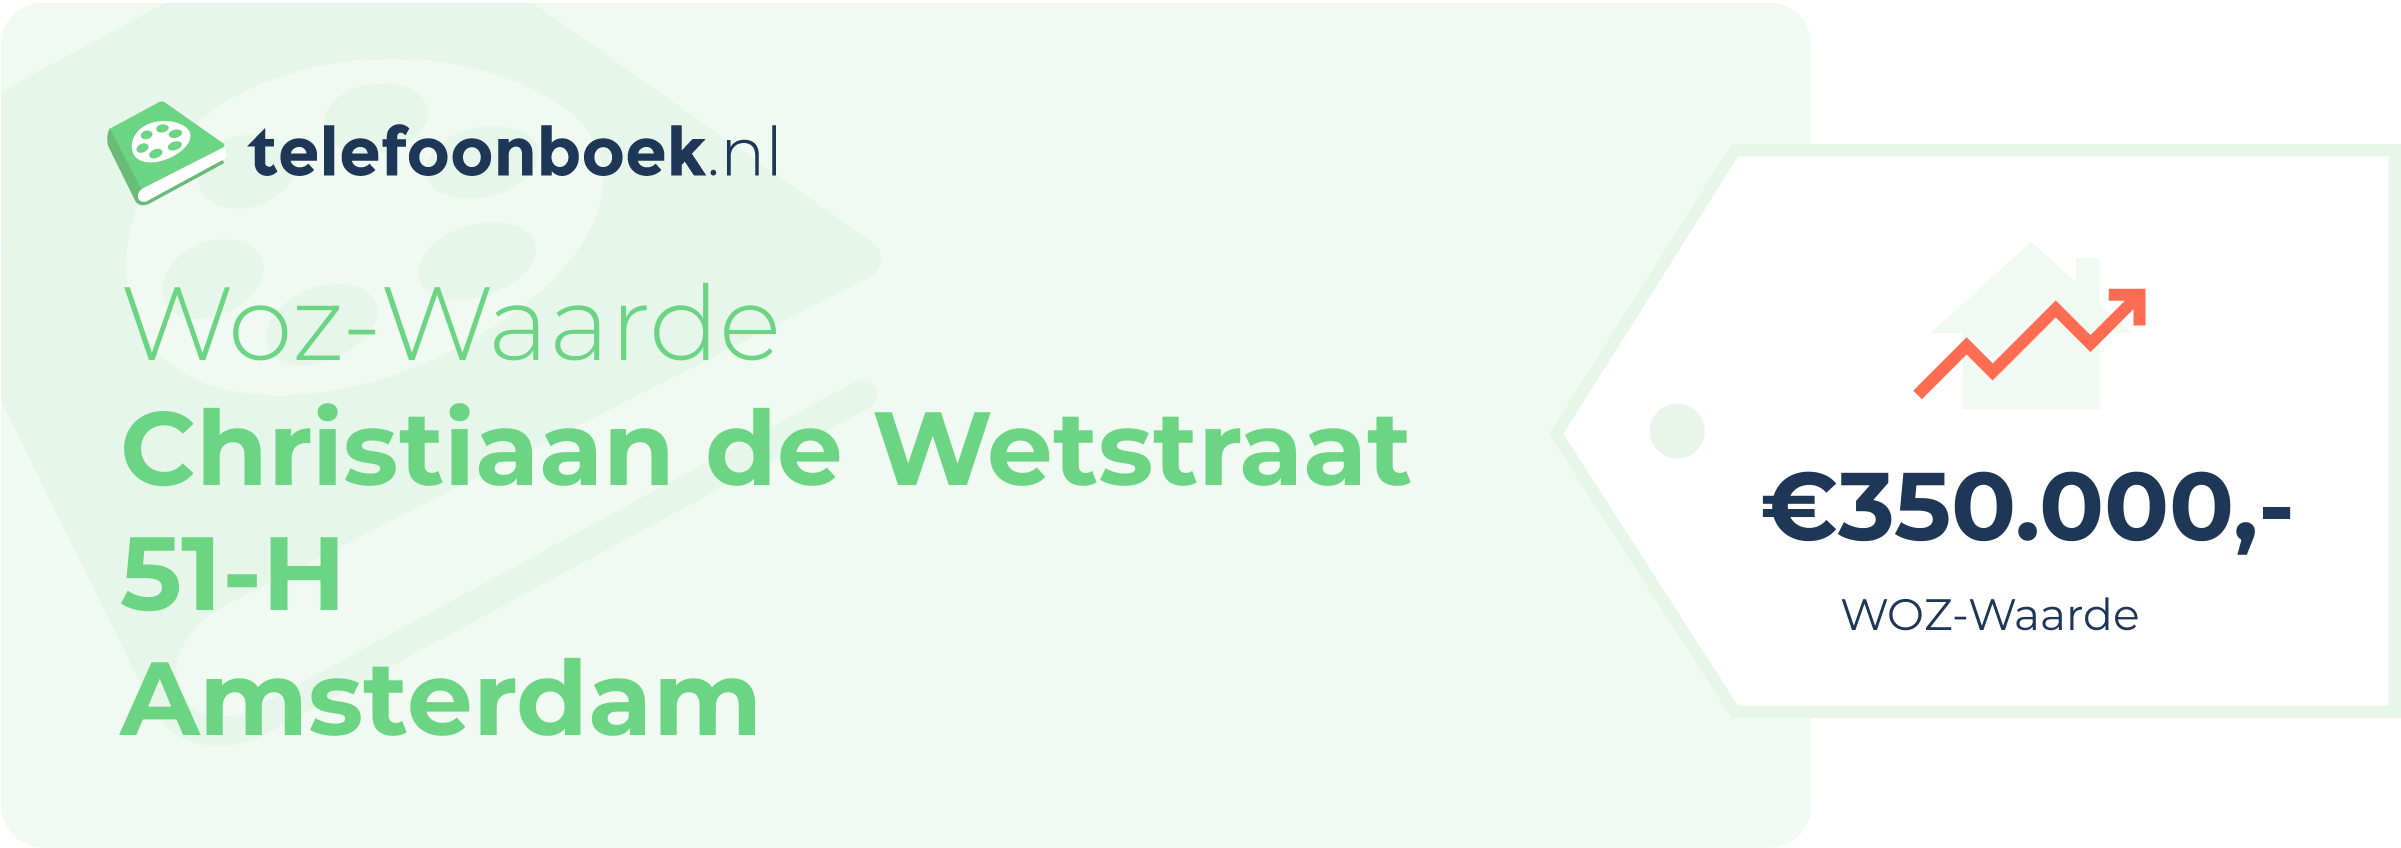 WOZ-waarde Christiaan De Wetstraat 51-H Amsterdam